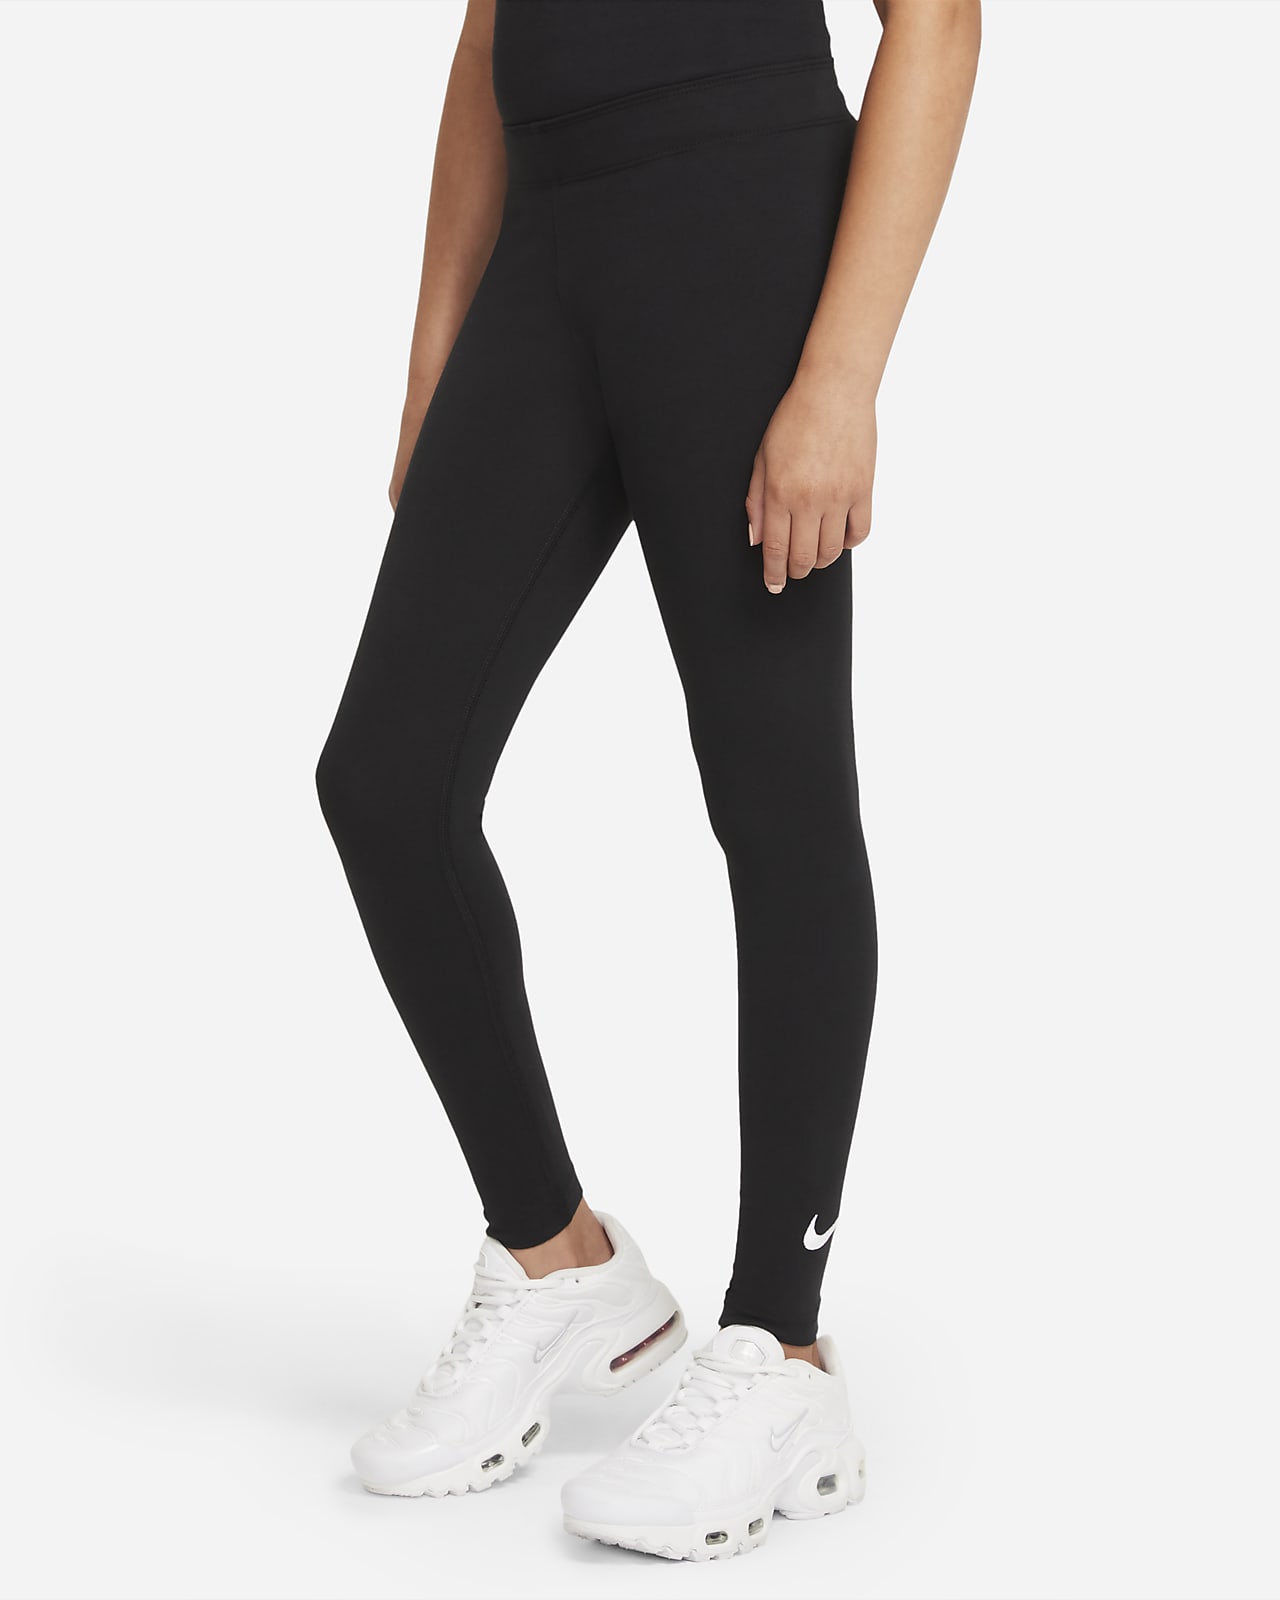 Nike Sportswear Favorites Leggings con logotipo Swoosh - Niña